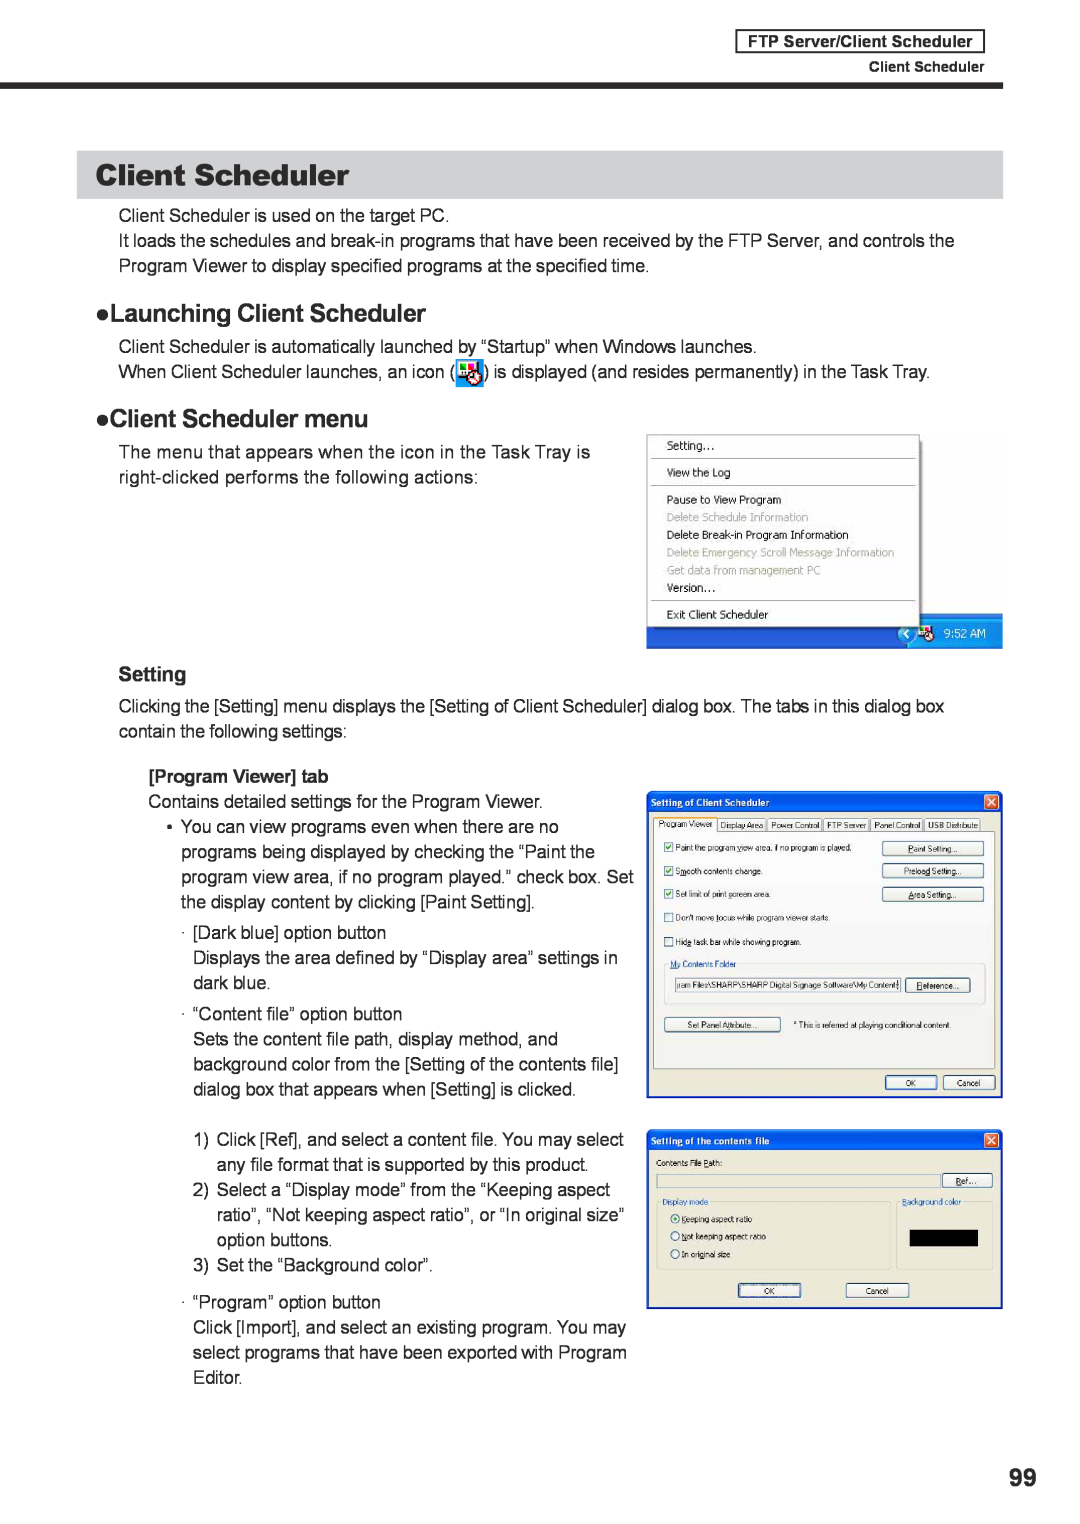 Sharp PNSV01 operation manual Launching Client Scheduler, Client Scheduler menu, Setting, Program Viewer tab 